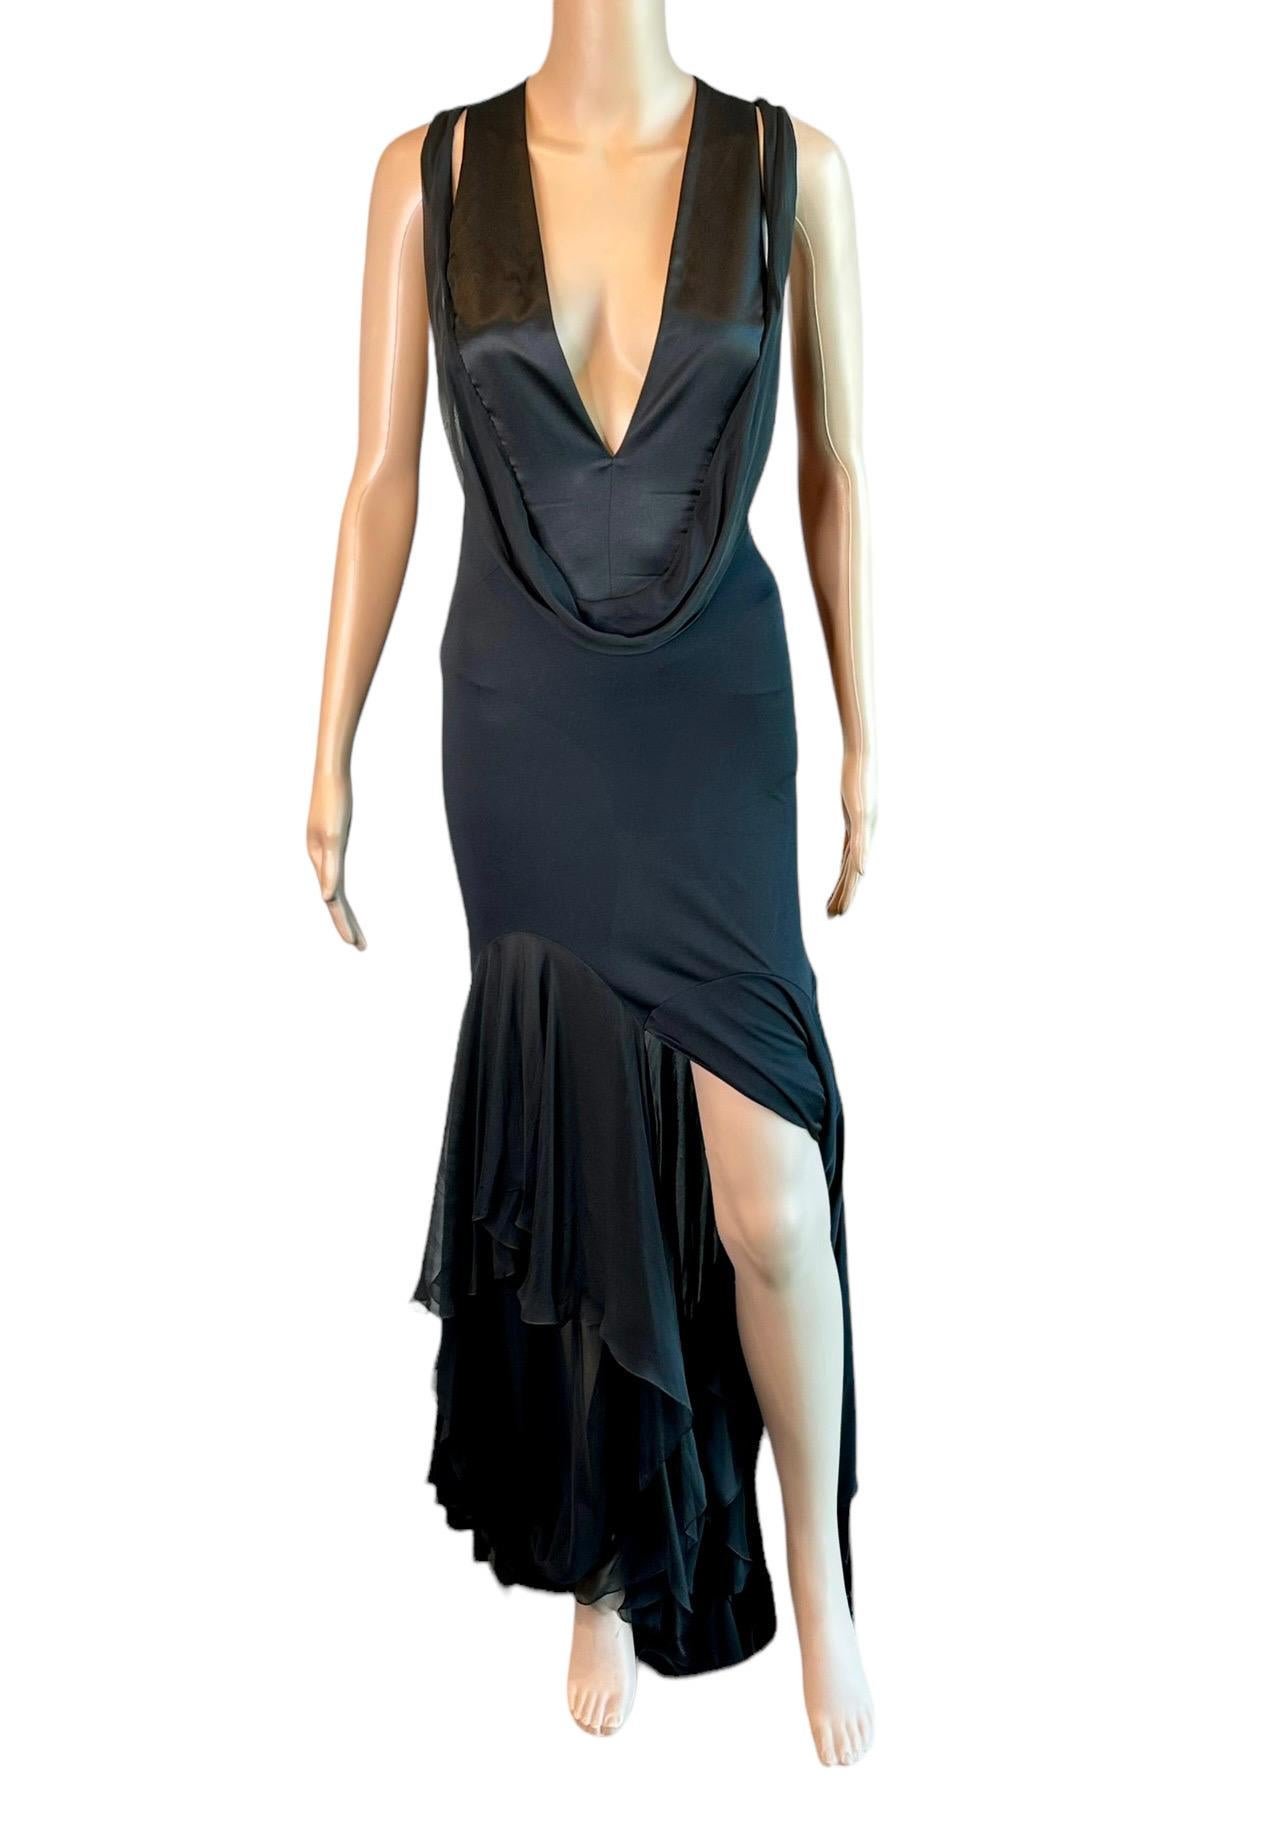 Versace S/S 2004 Plunged Halter Open Back Ruffles Black Evening Dress Gown  1